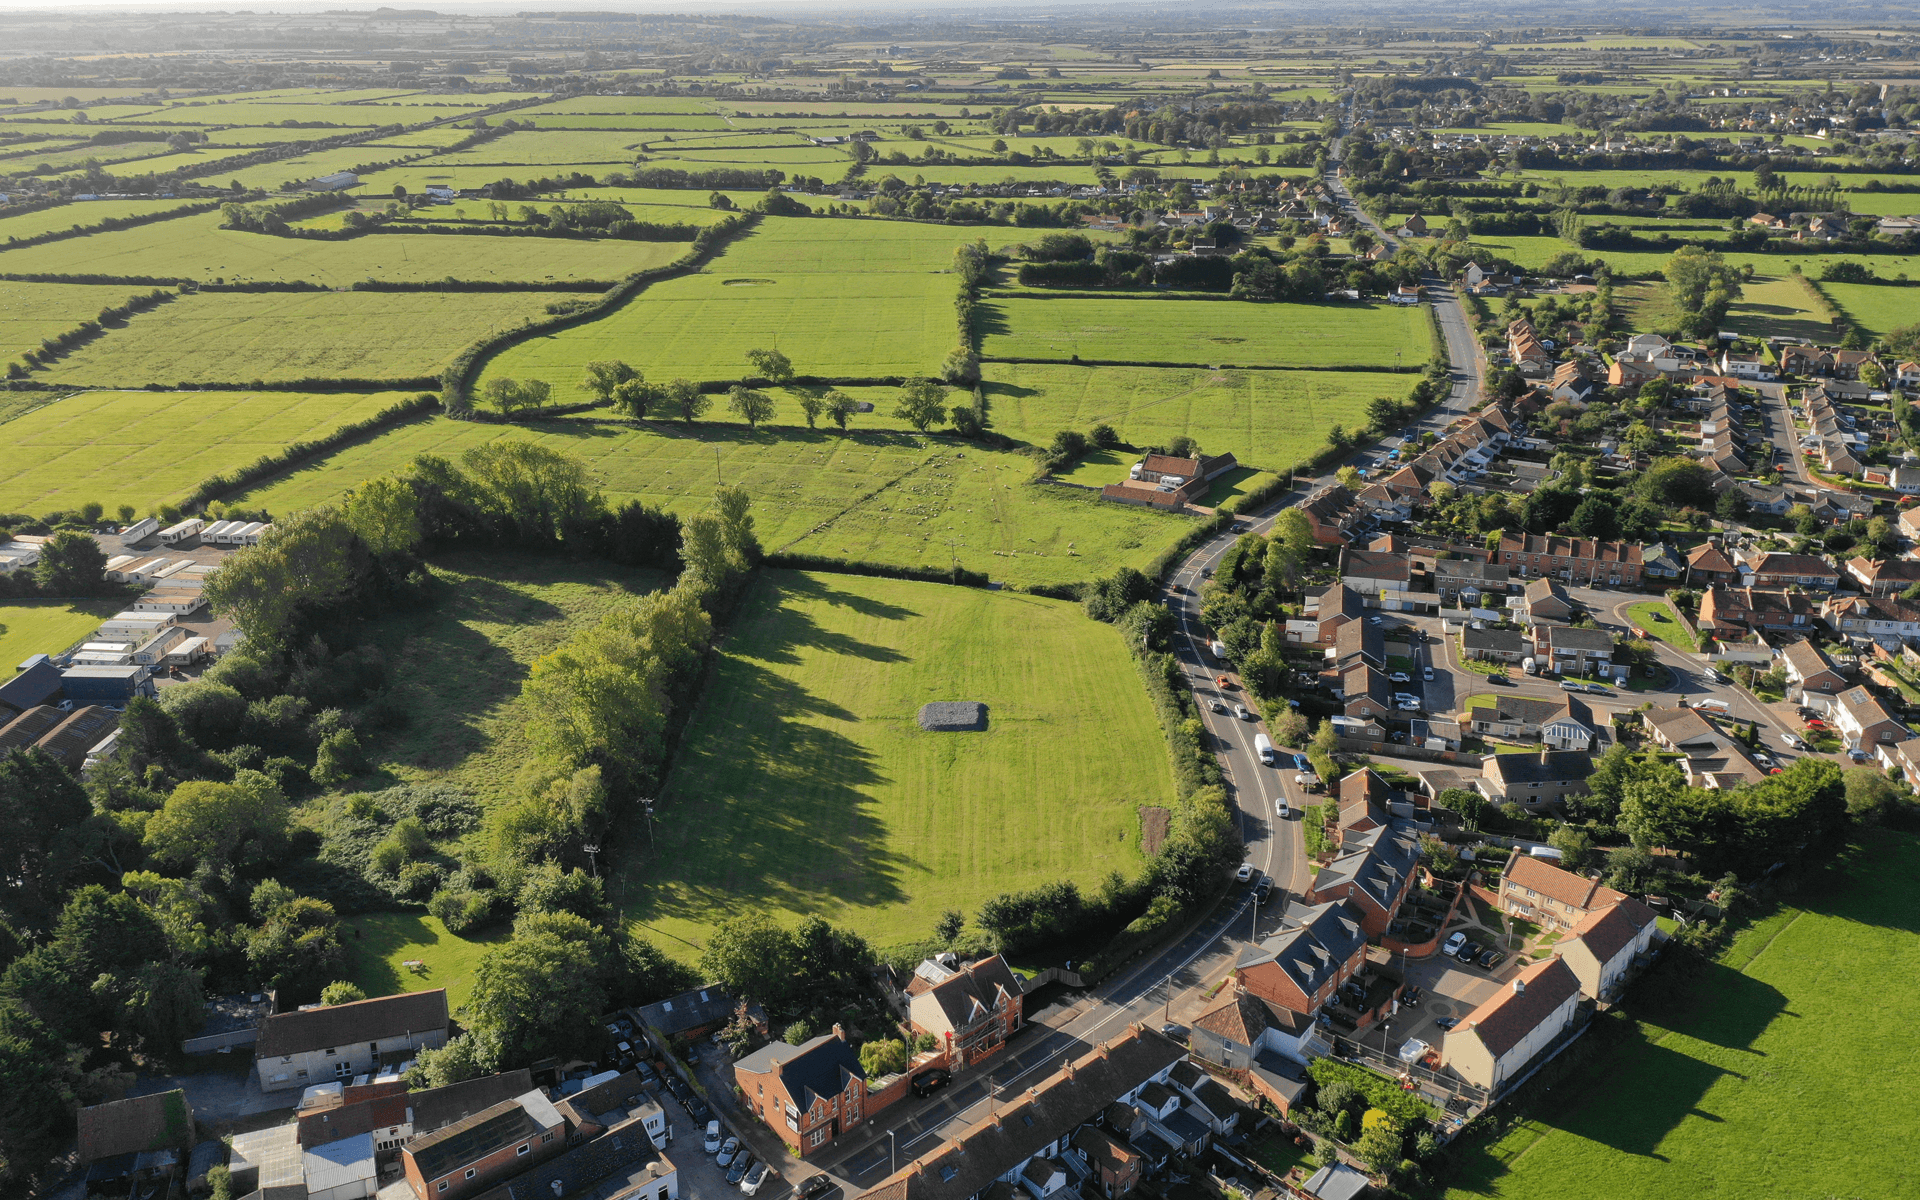 "Mavic 2 Pro" aerial drone photo of a "Barratt Homes" development site in Alstone, Highbridge